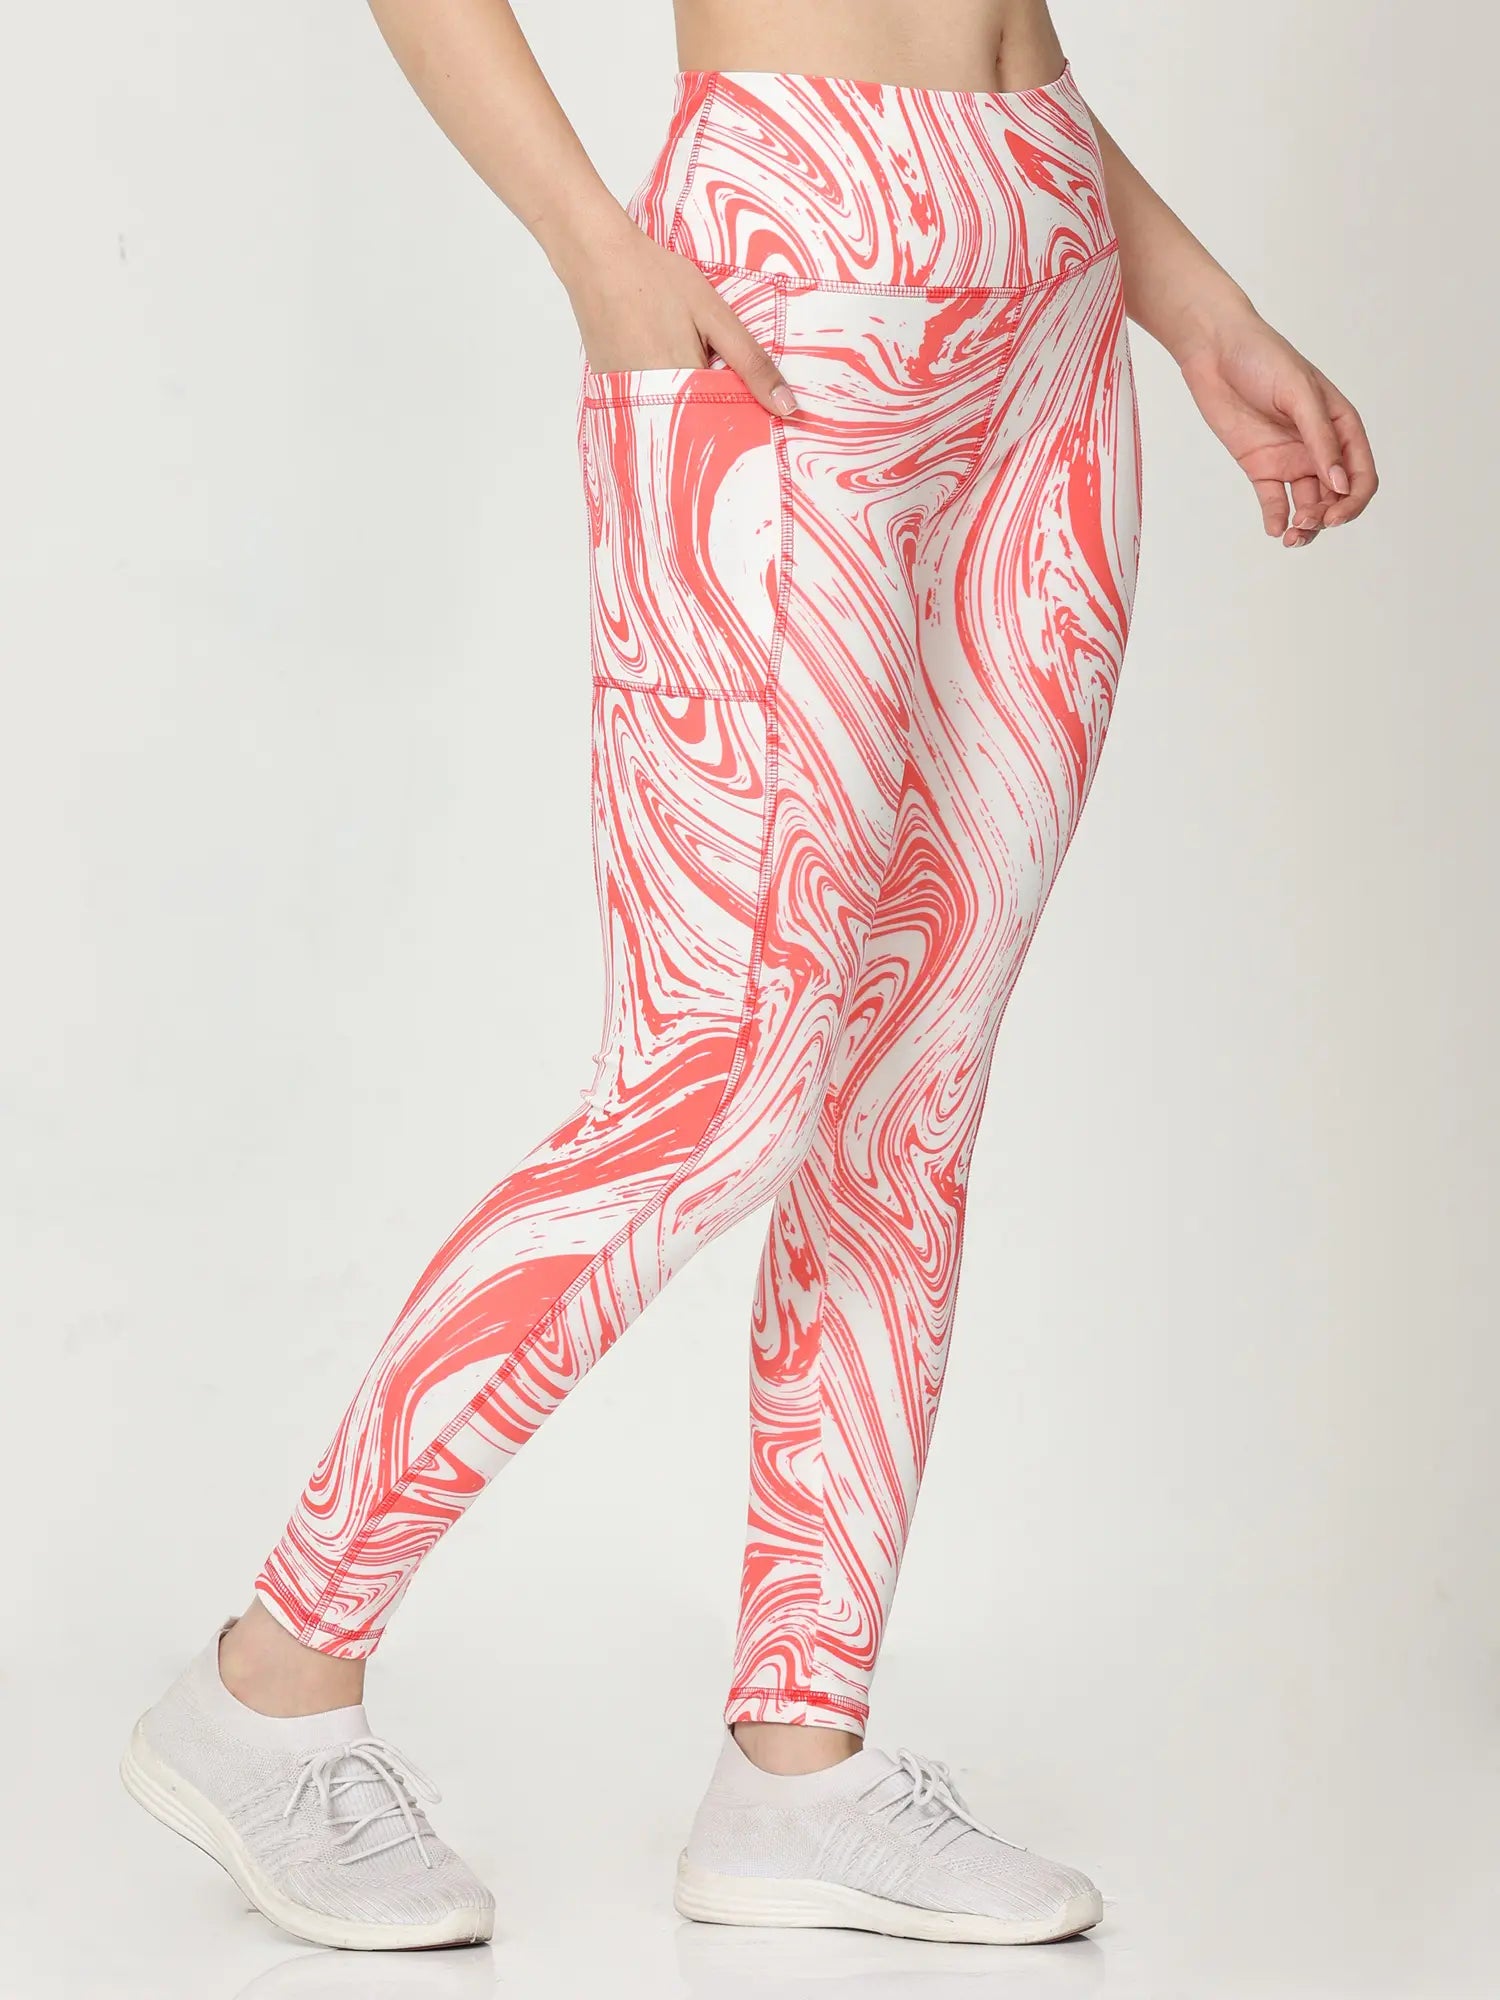 Women's High Rise Plant/Flower Printed Activewear Leggings -Wild Thing, L -  Walmart.com